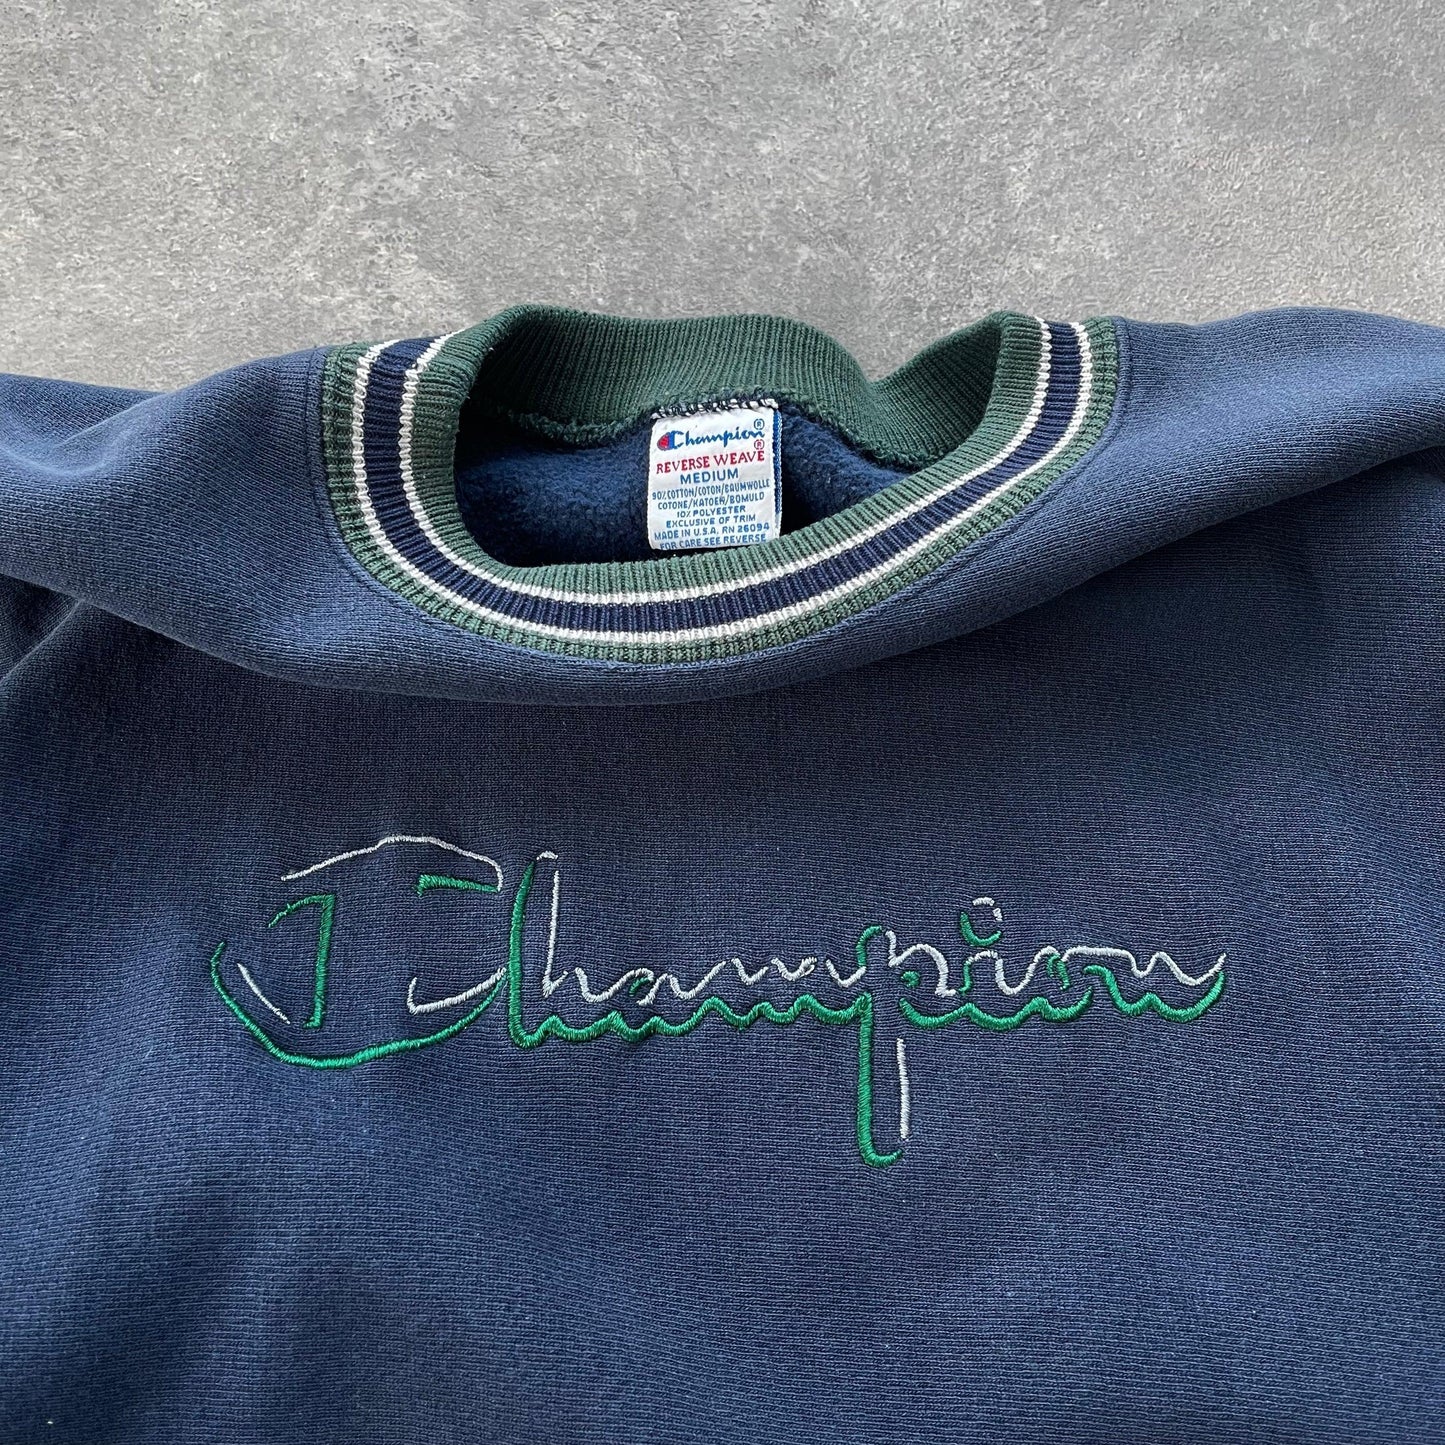 Champion 1990s reverse weave heavyweight sweatshirt (M) - Known Source